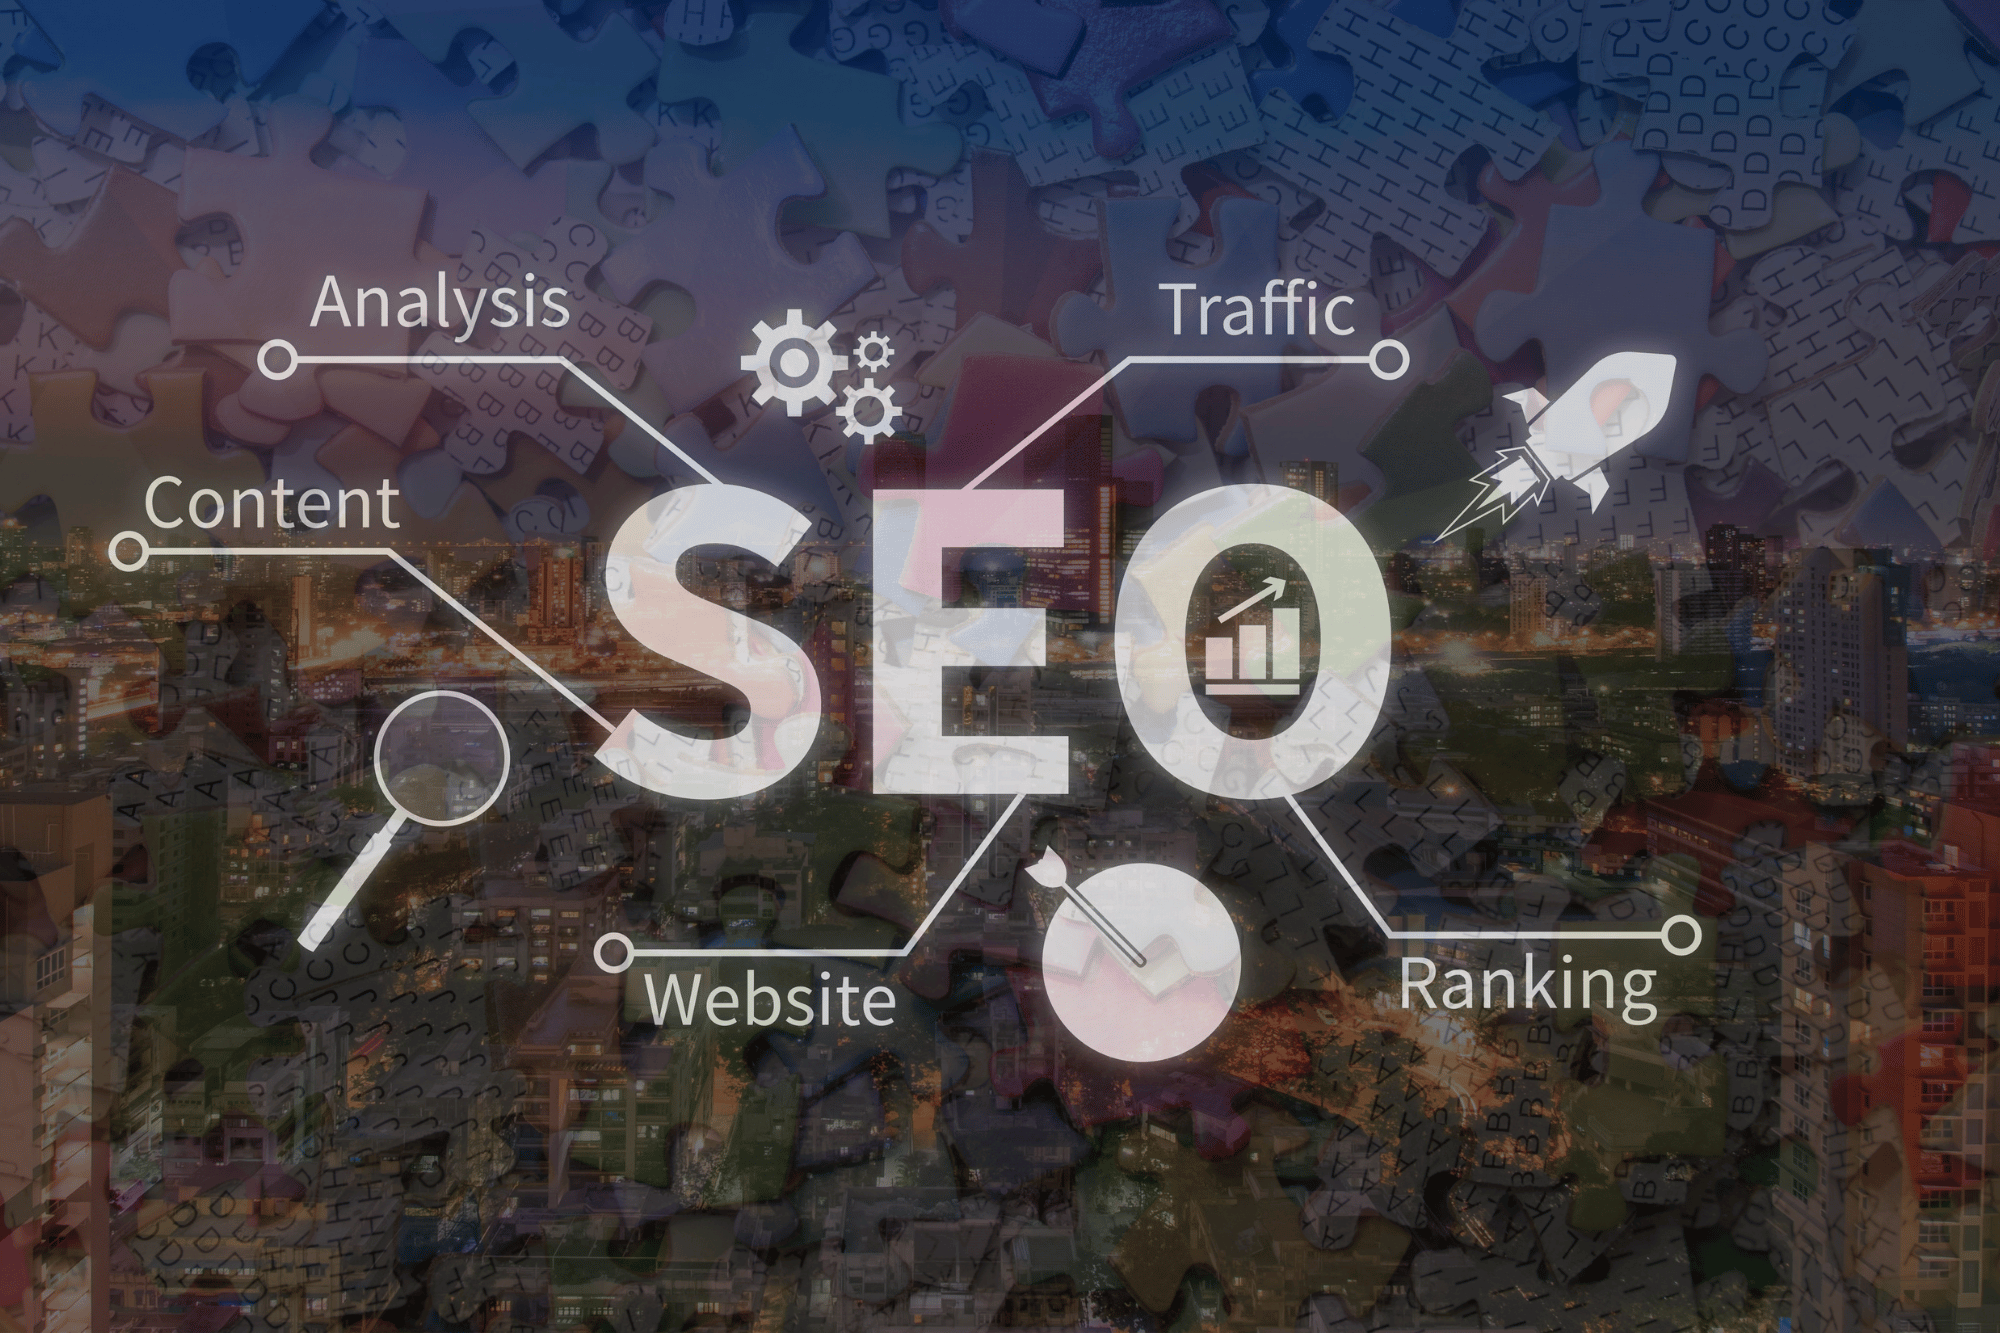 seo-search-engine-optimization-marketing-ranking-traffic-website